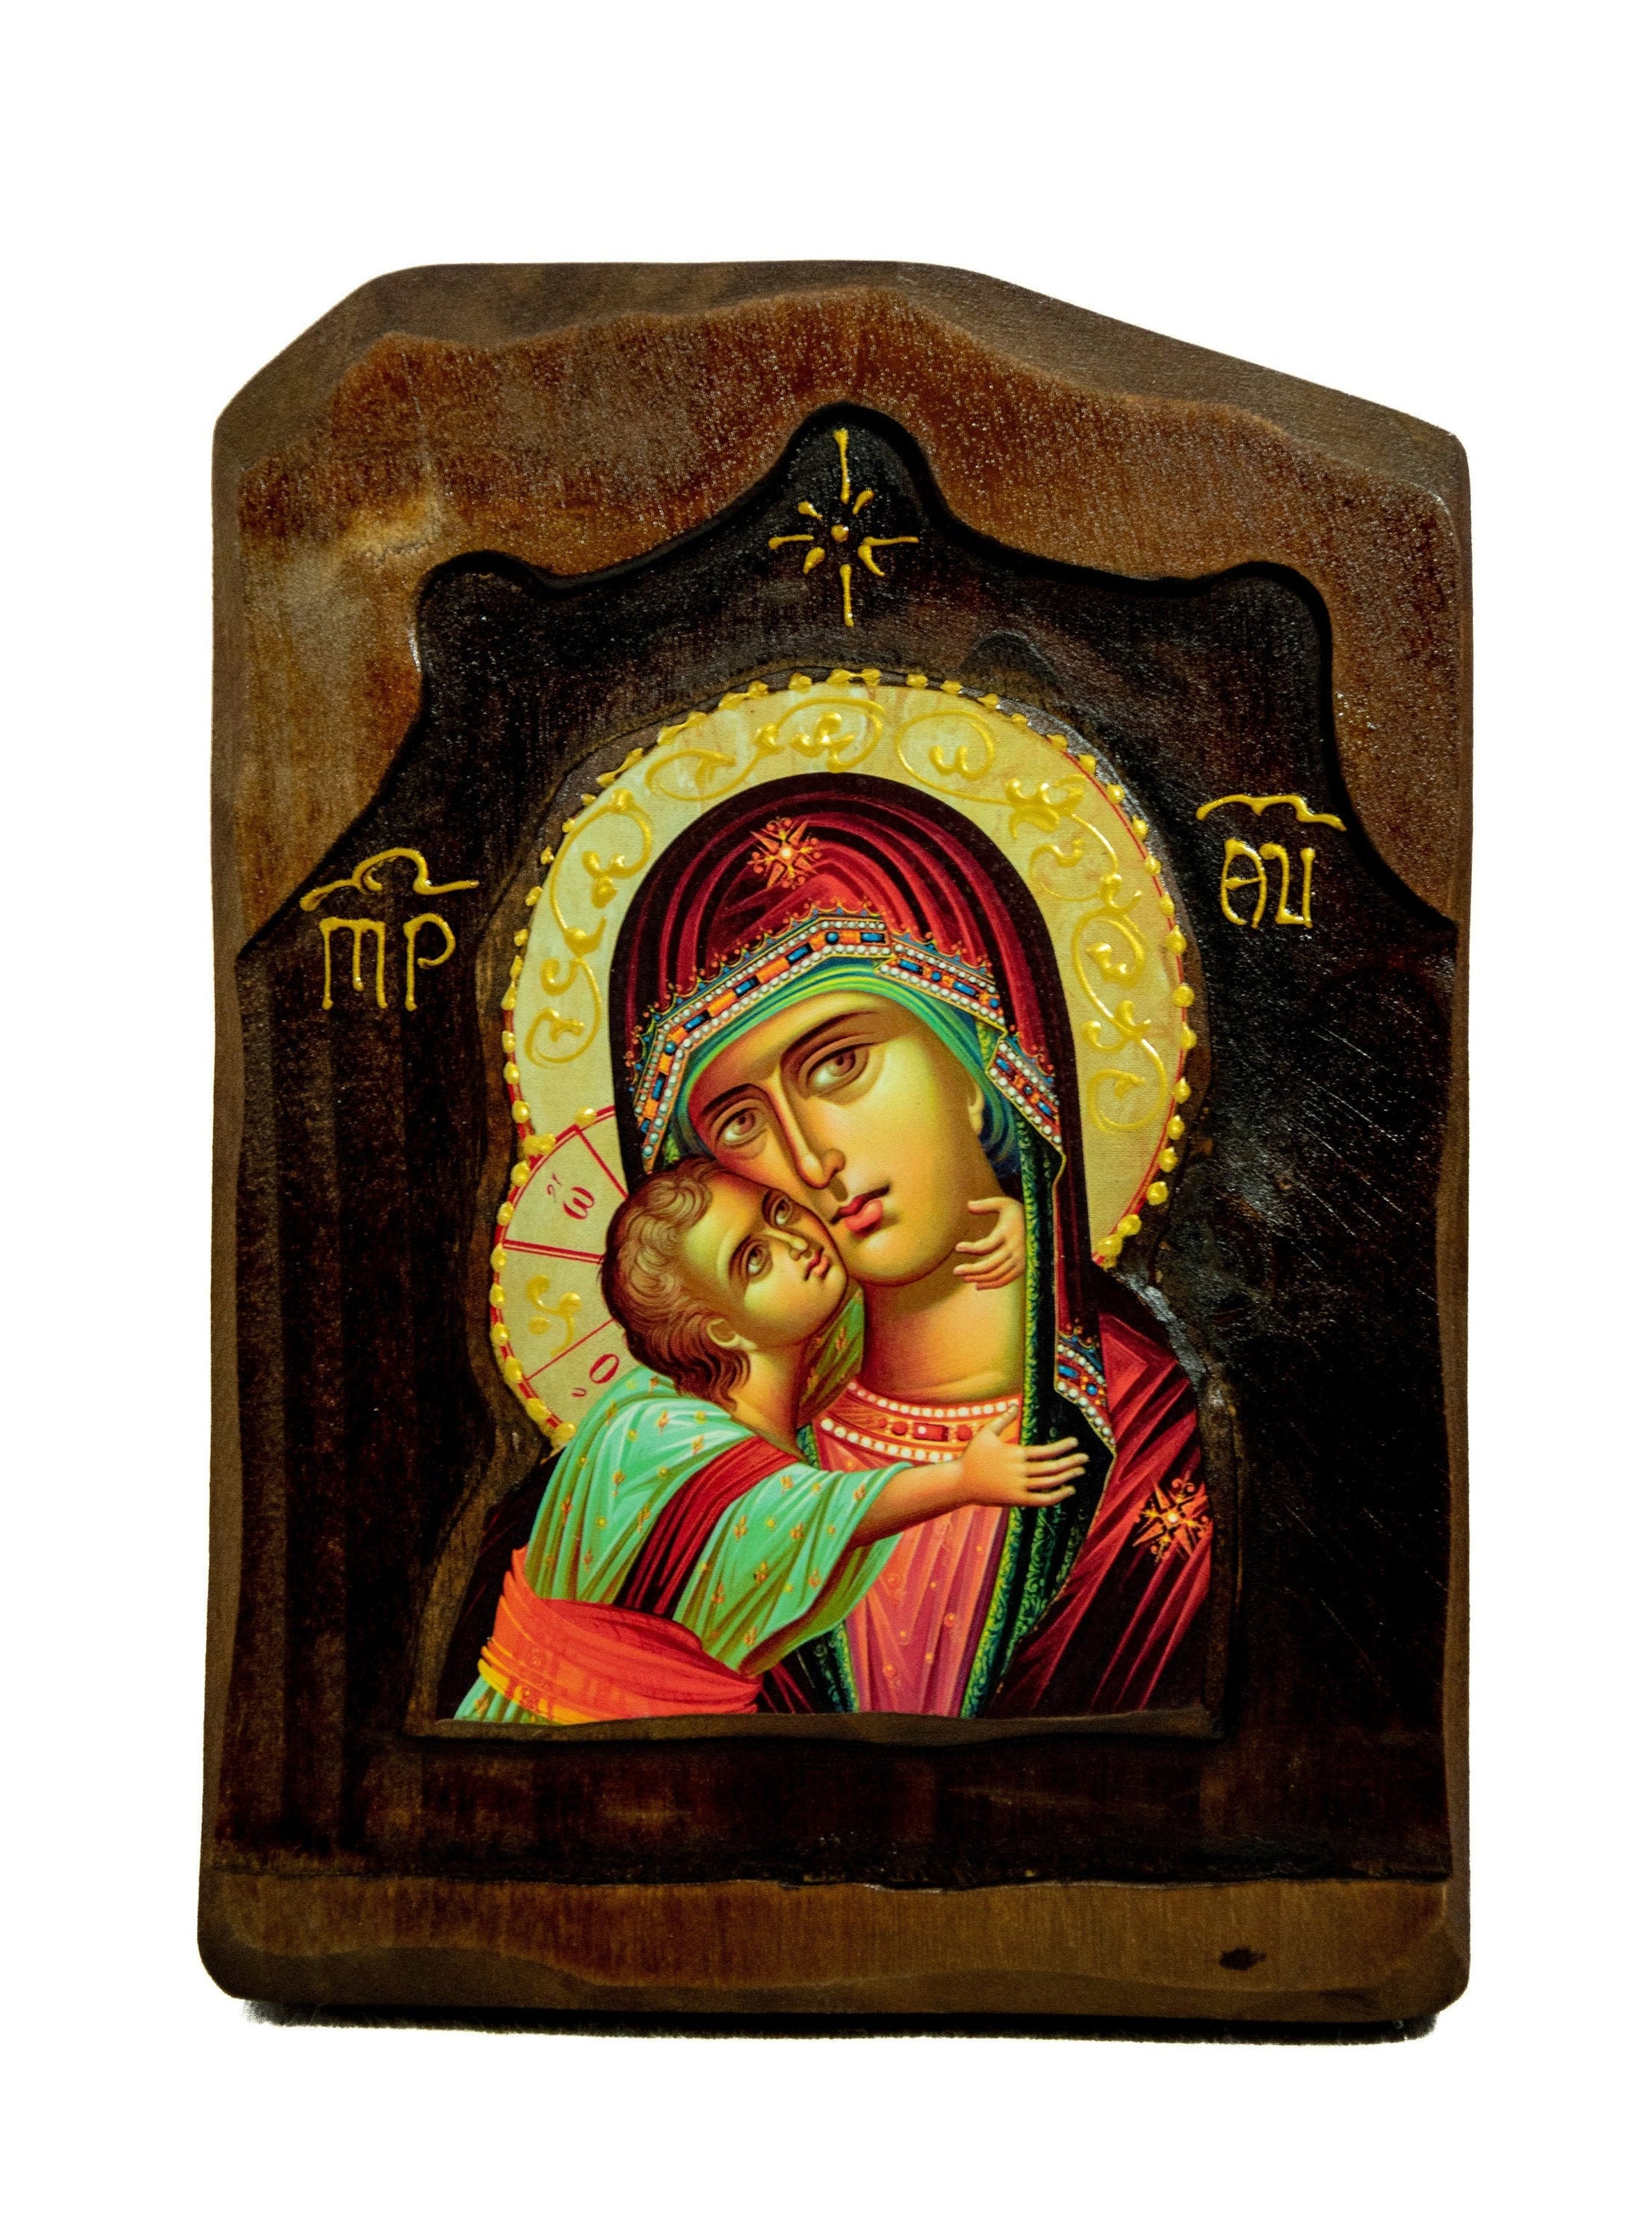 Virgin Mary icon Panagia, Handmade Greek Orthodox Icon, Mother of God Byzantine art, Theotokos wall hanging wood plaque, religious decor TheHolyArt